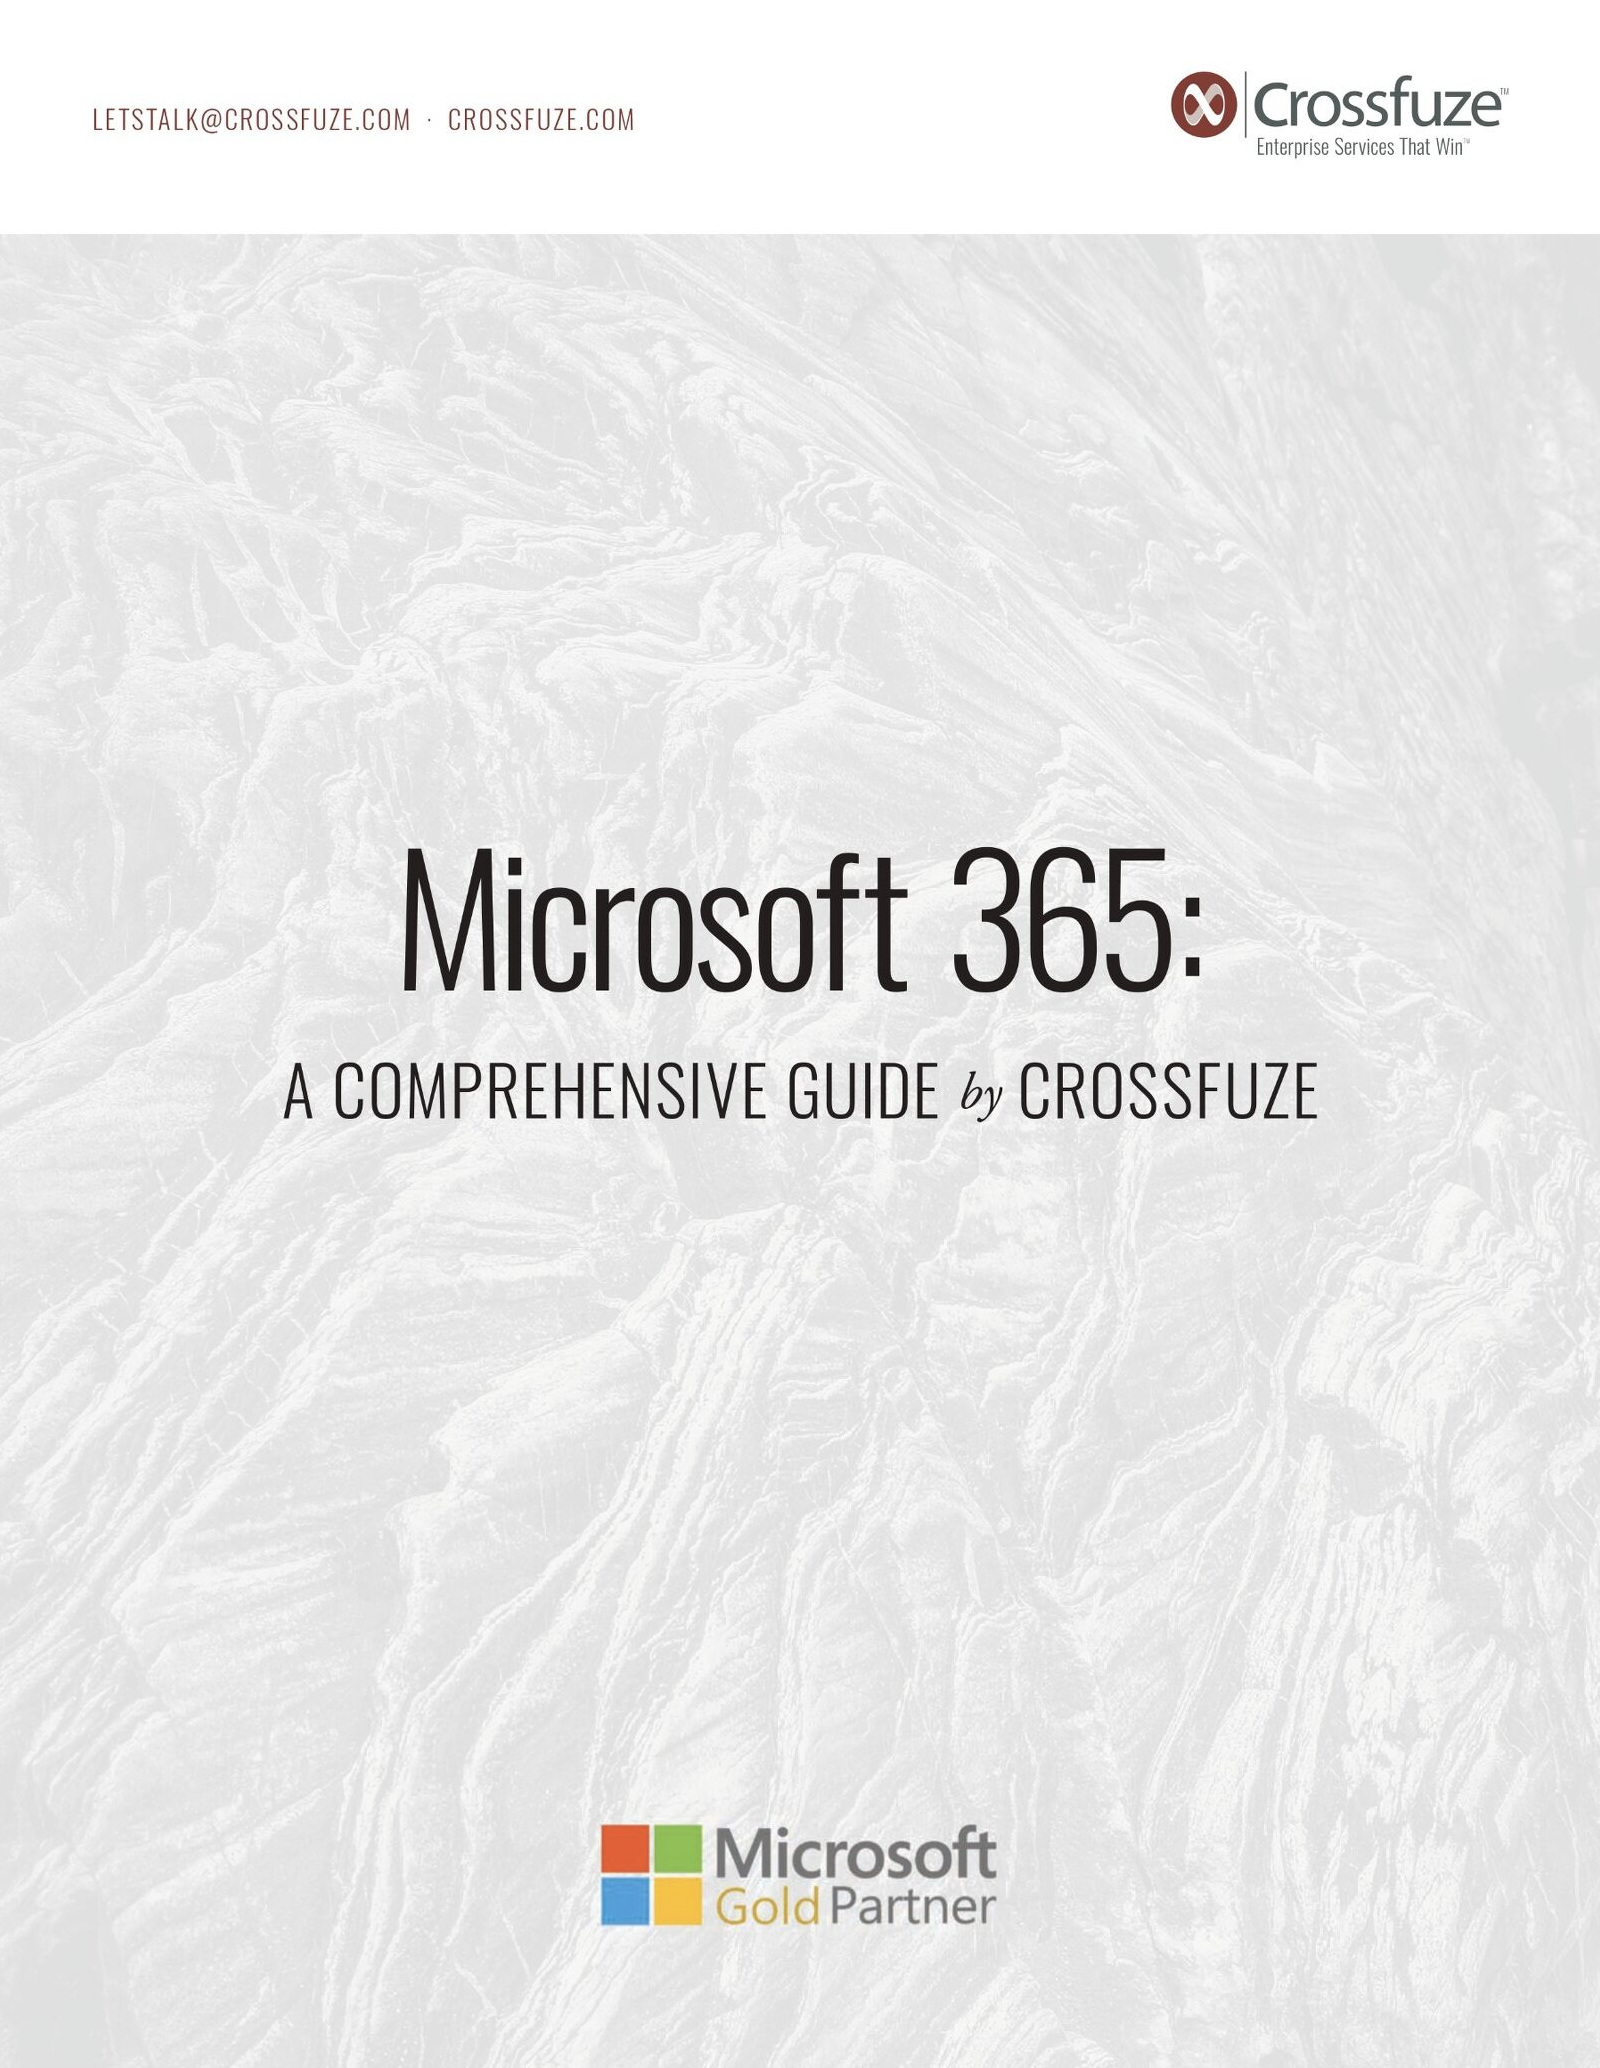 microsoft office 365 2016 ebook download